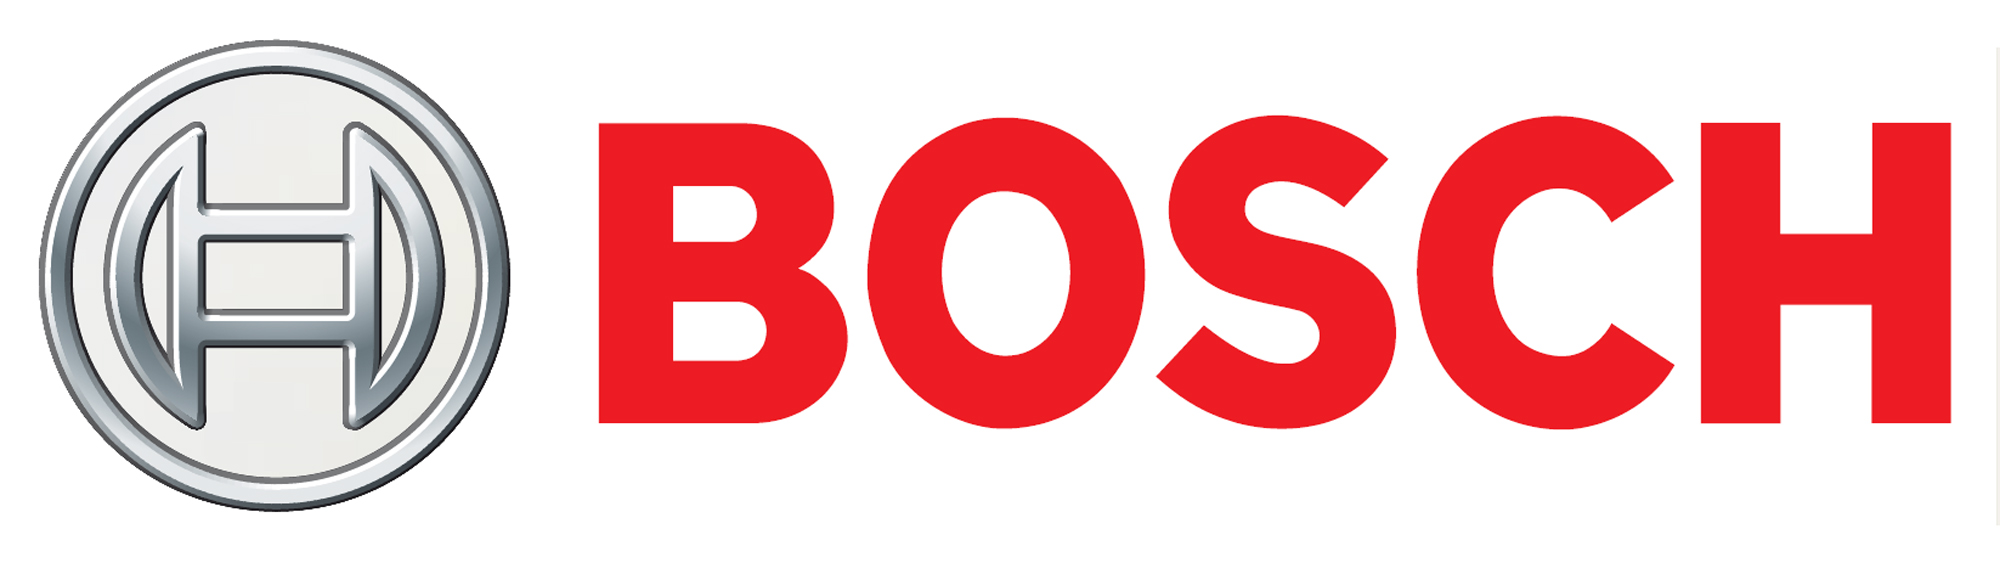 ANG AUTO - logo Bosch